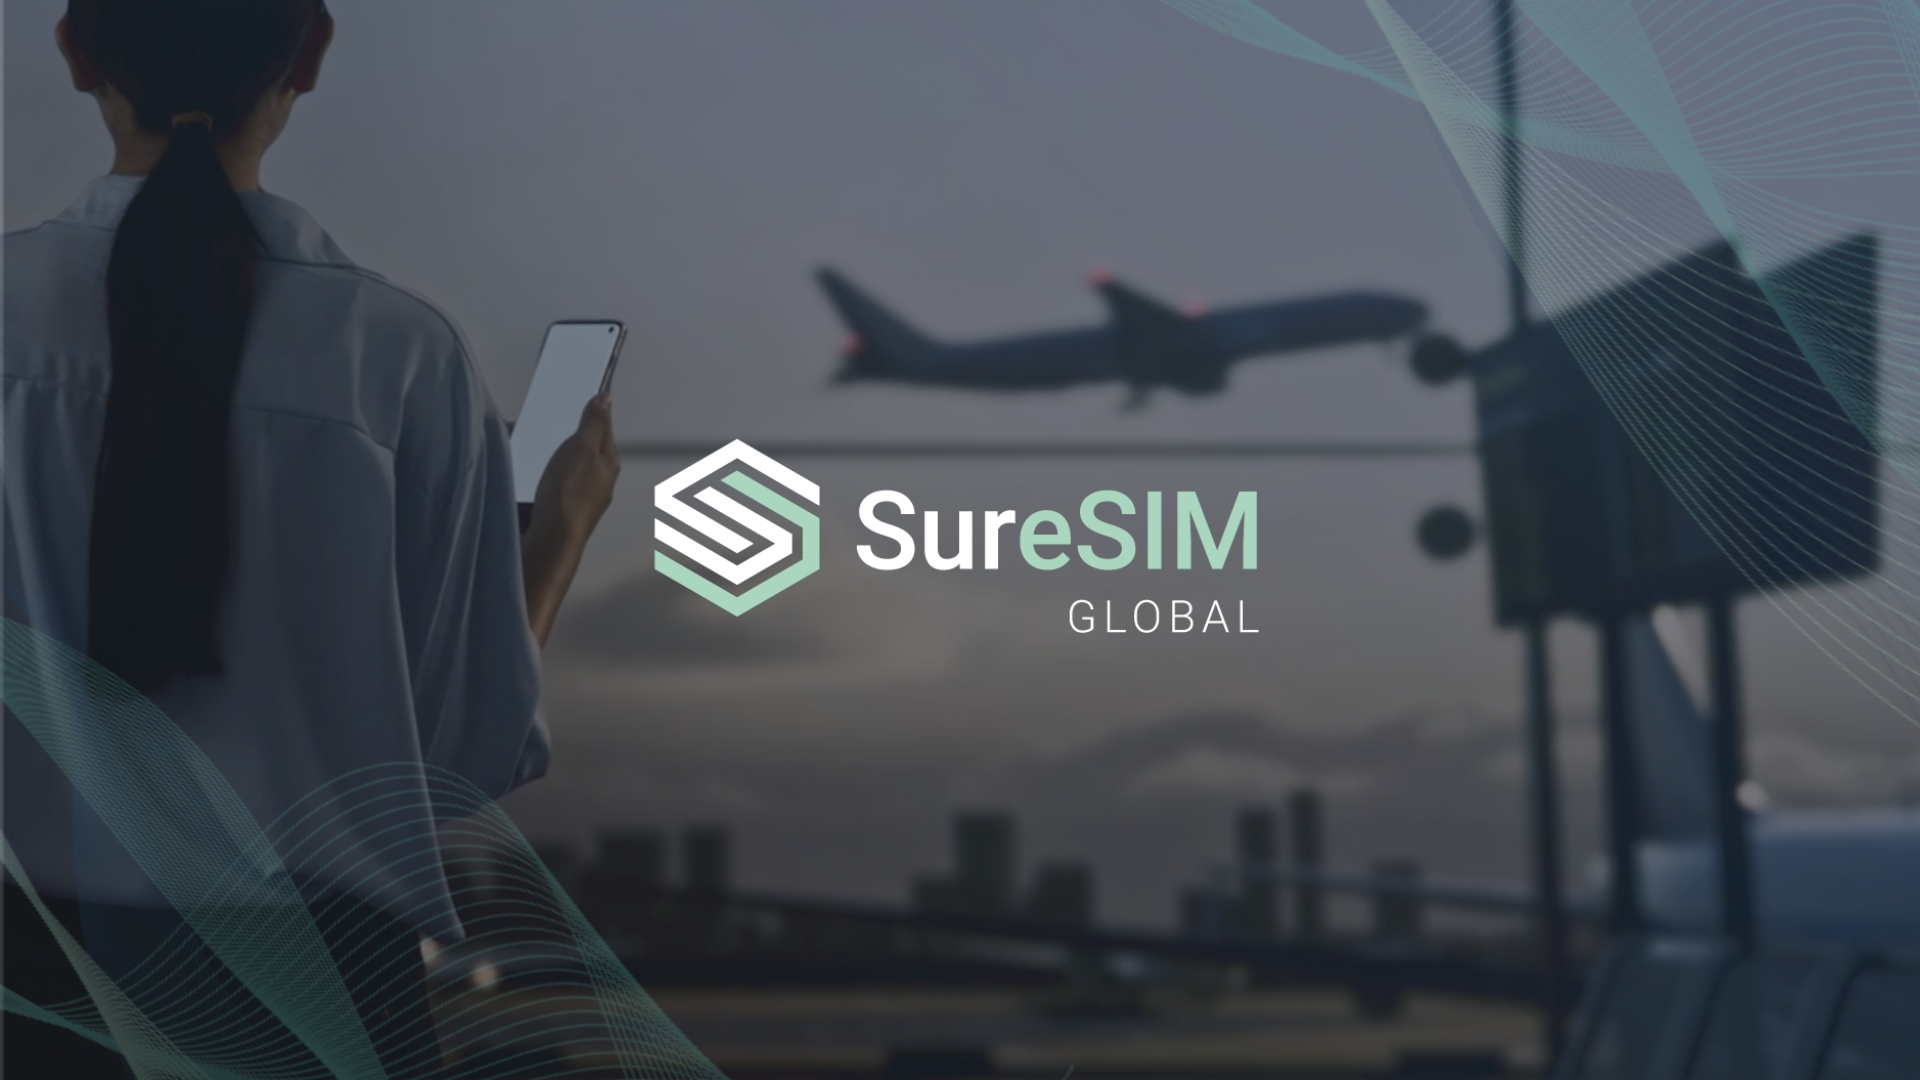 Utelize Mobile Launches SureSIM Global eSIM for UK Multinational Businesses